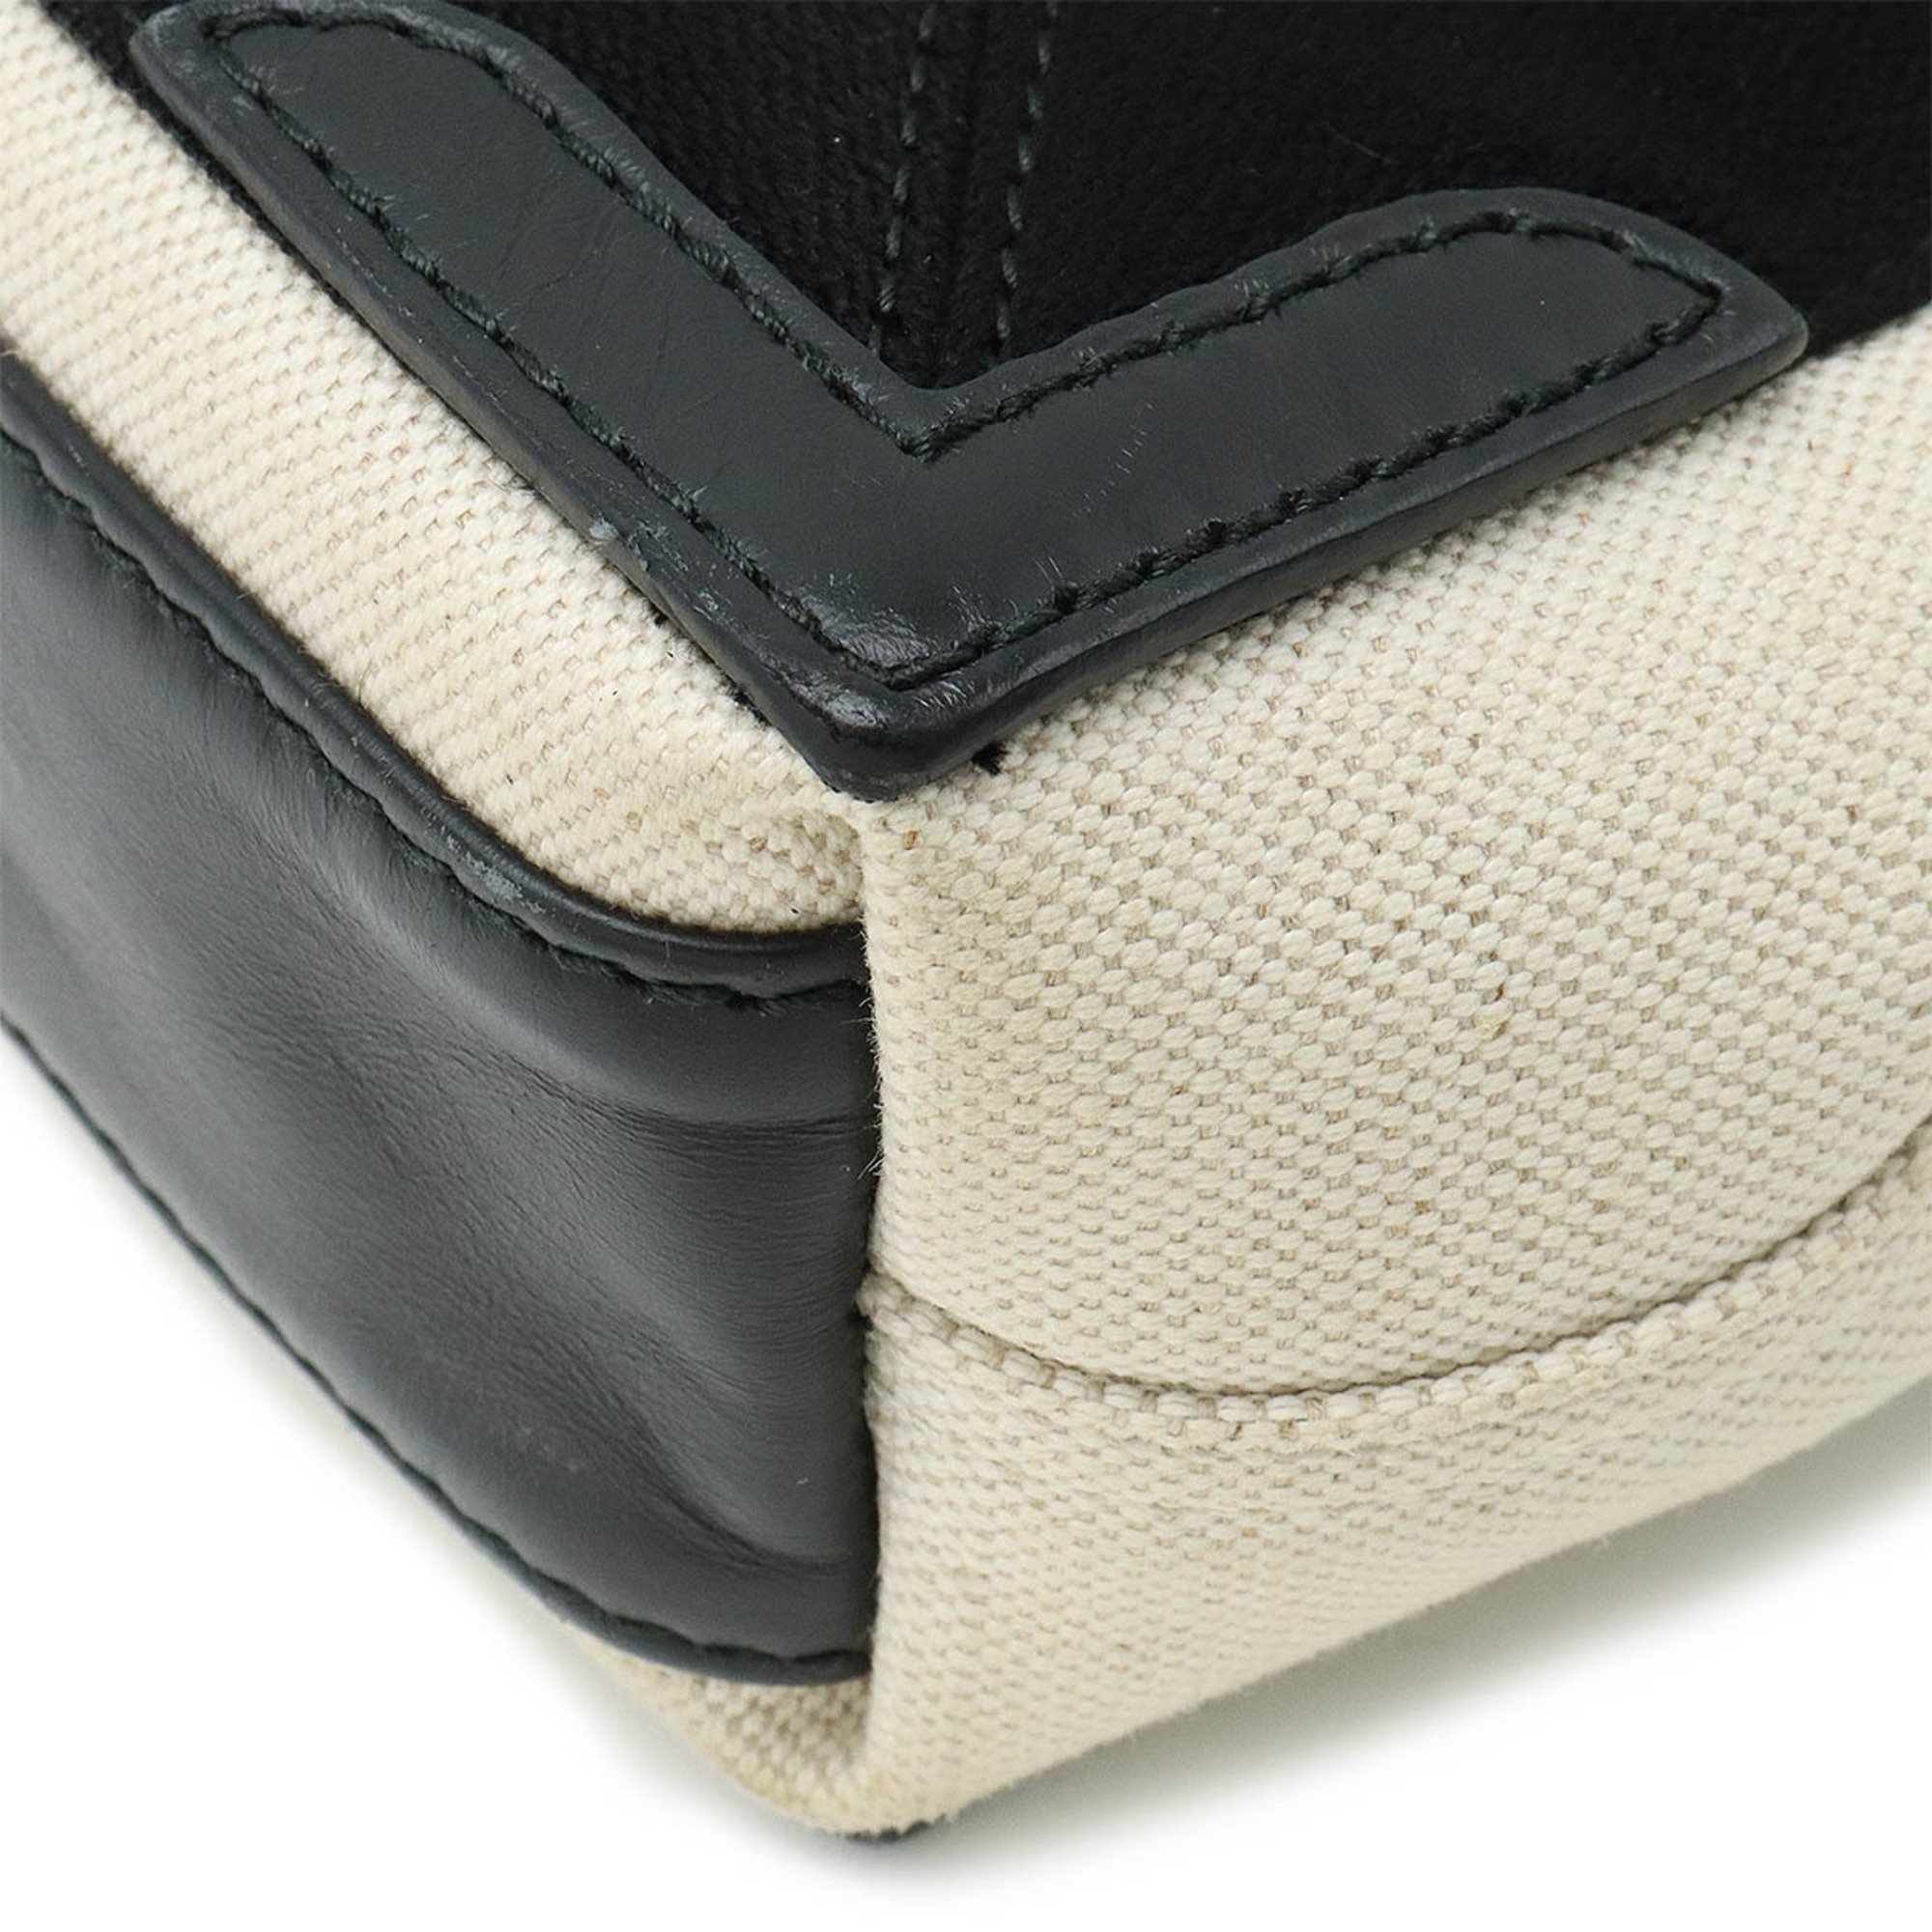 BALENCIAGA Navy Cabas XS Handbag Shoulder Bag Canvas Ivory Black 390346